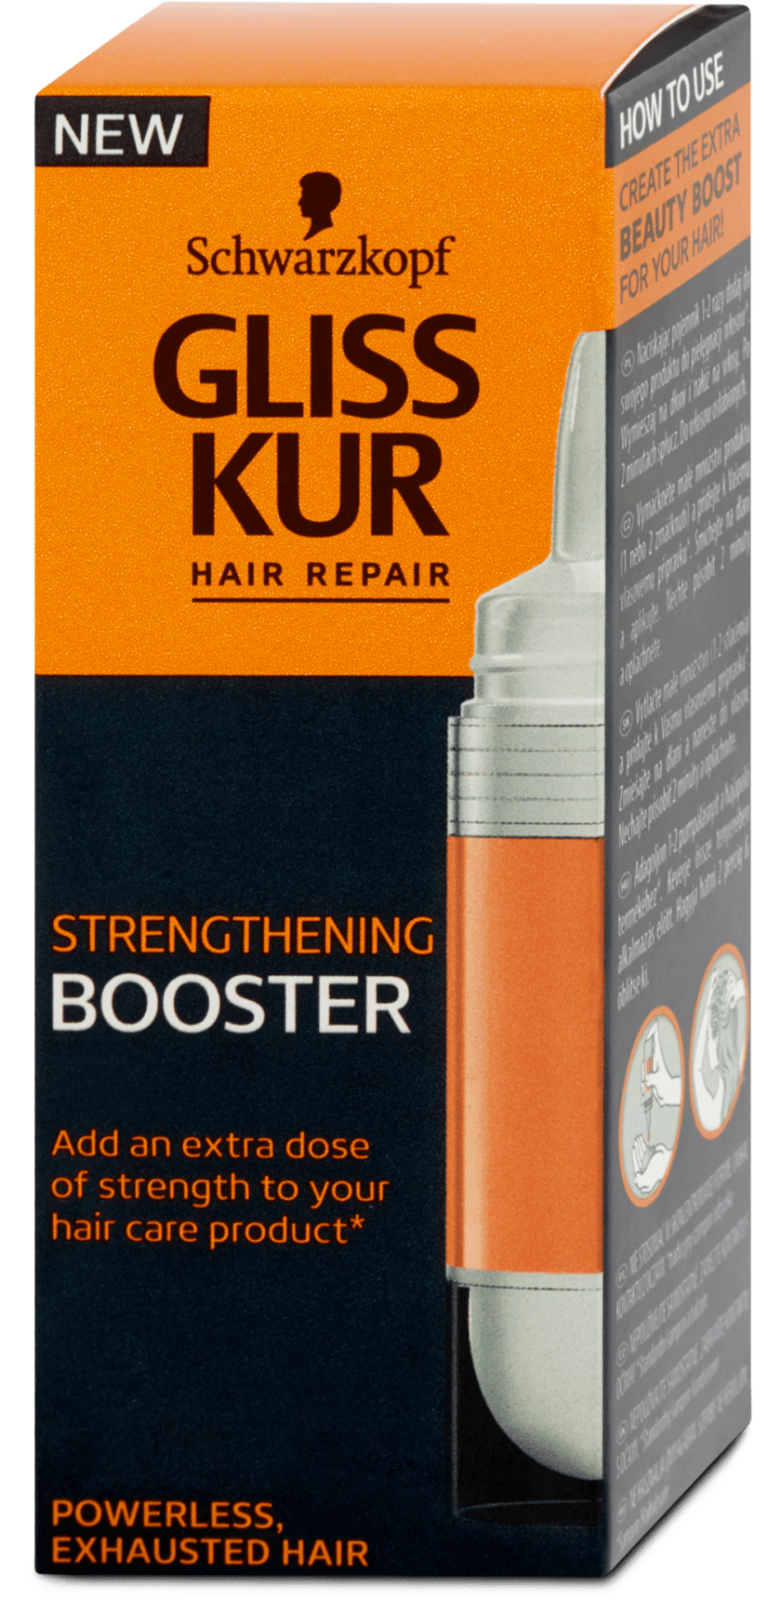 Genuine Schwarzkopf Gliss Kur Hair Repair Strengthening Booster Hair Care 15 ml  - $17.50